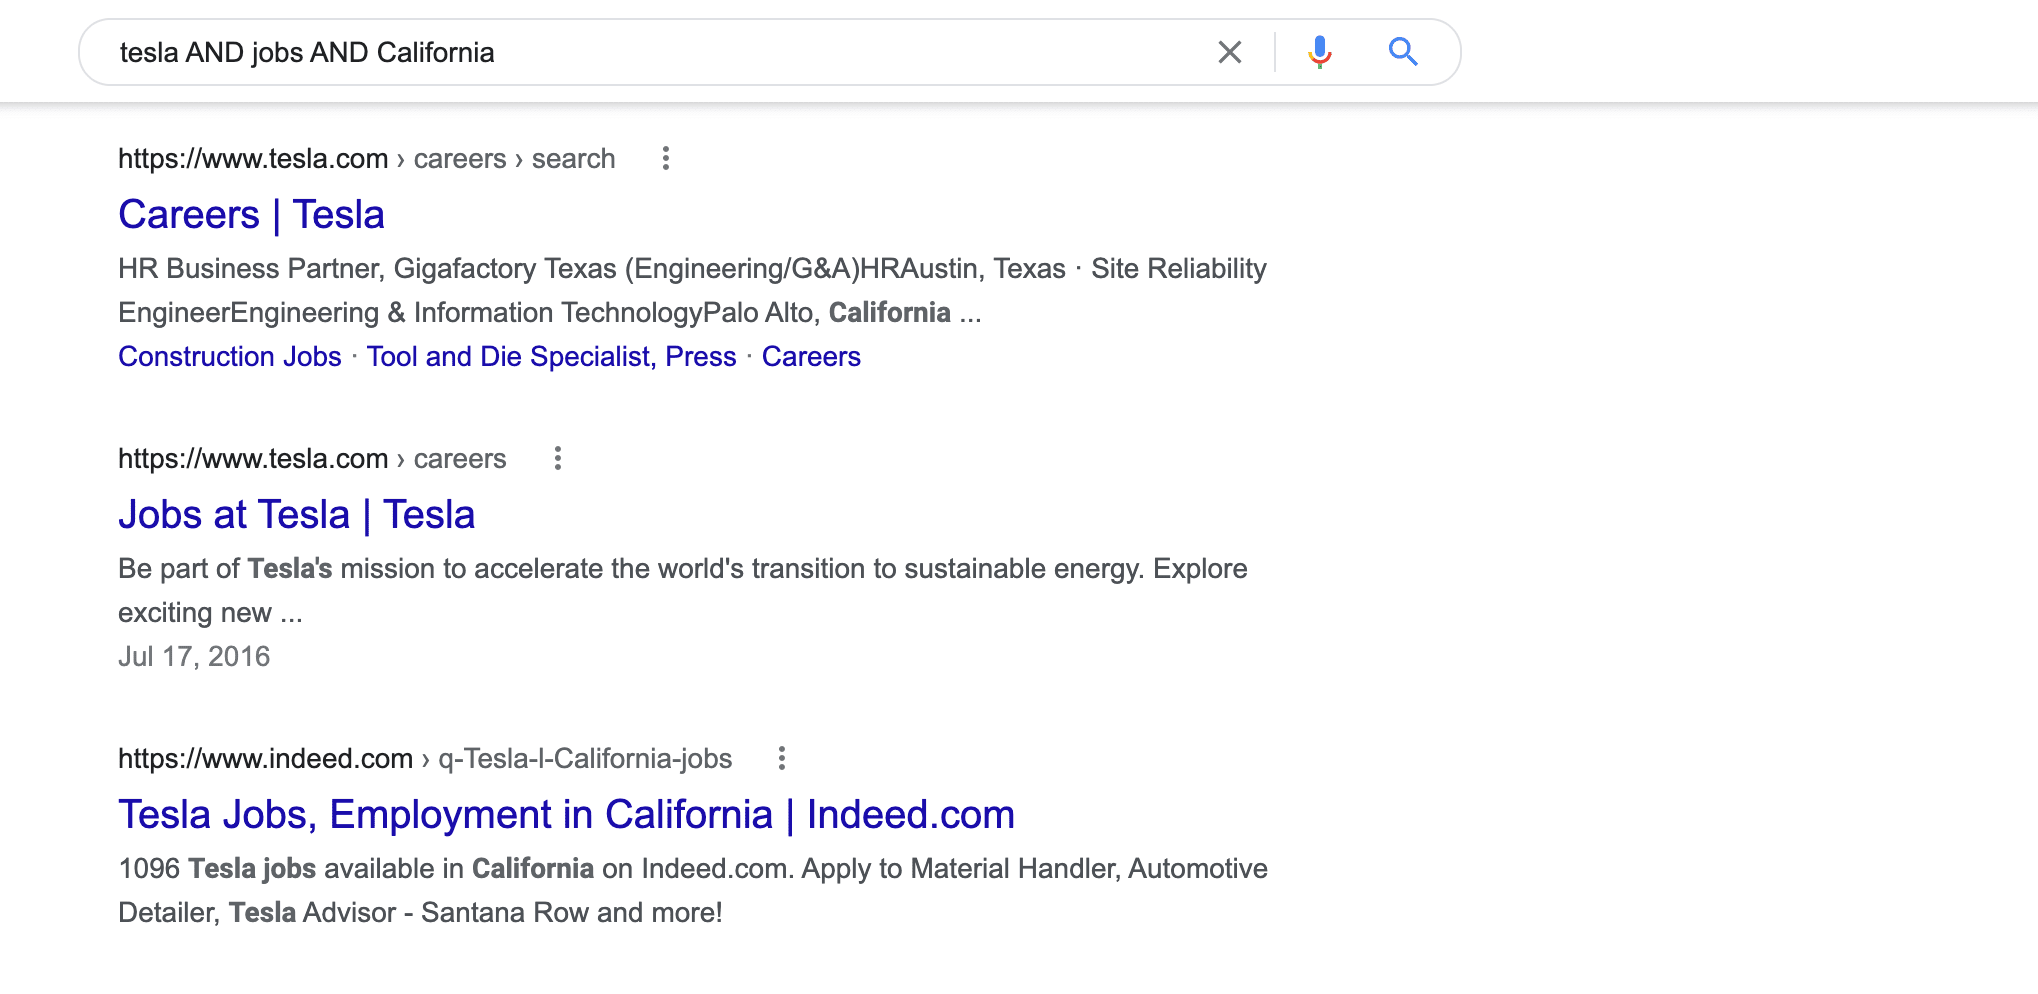 tesla AND jobs AND California